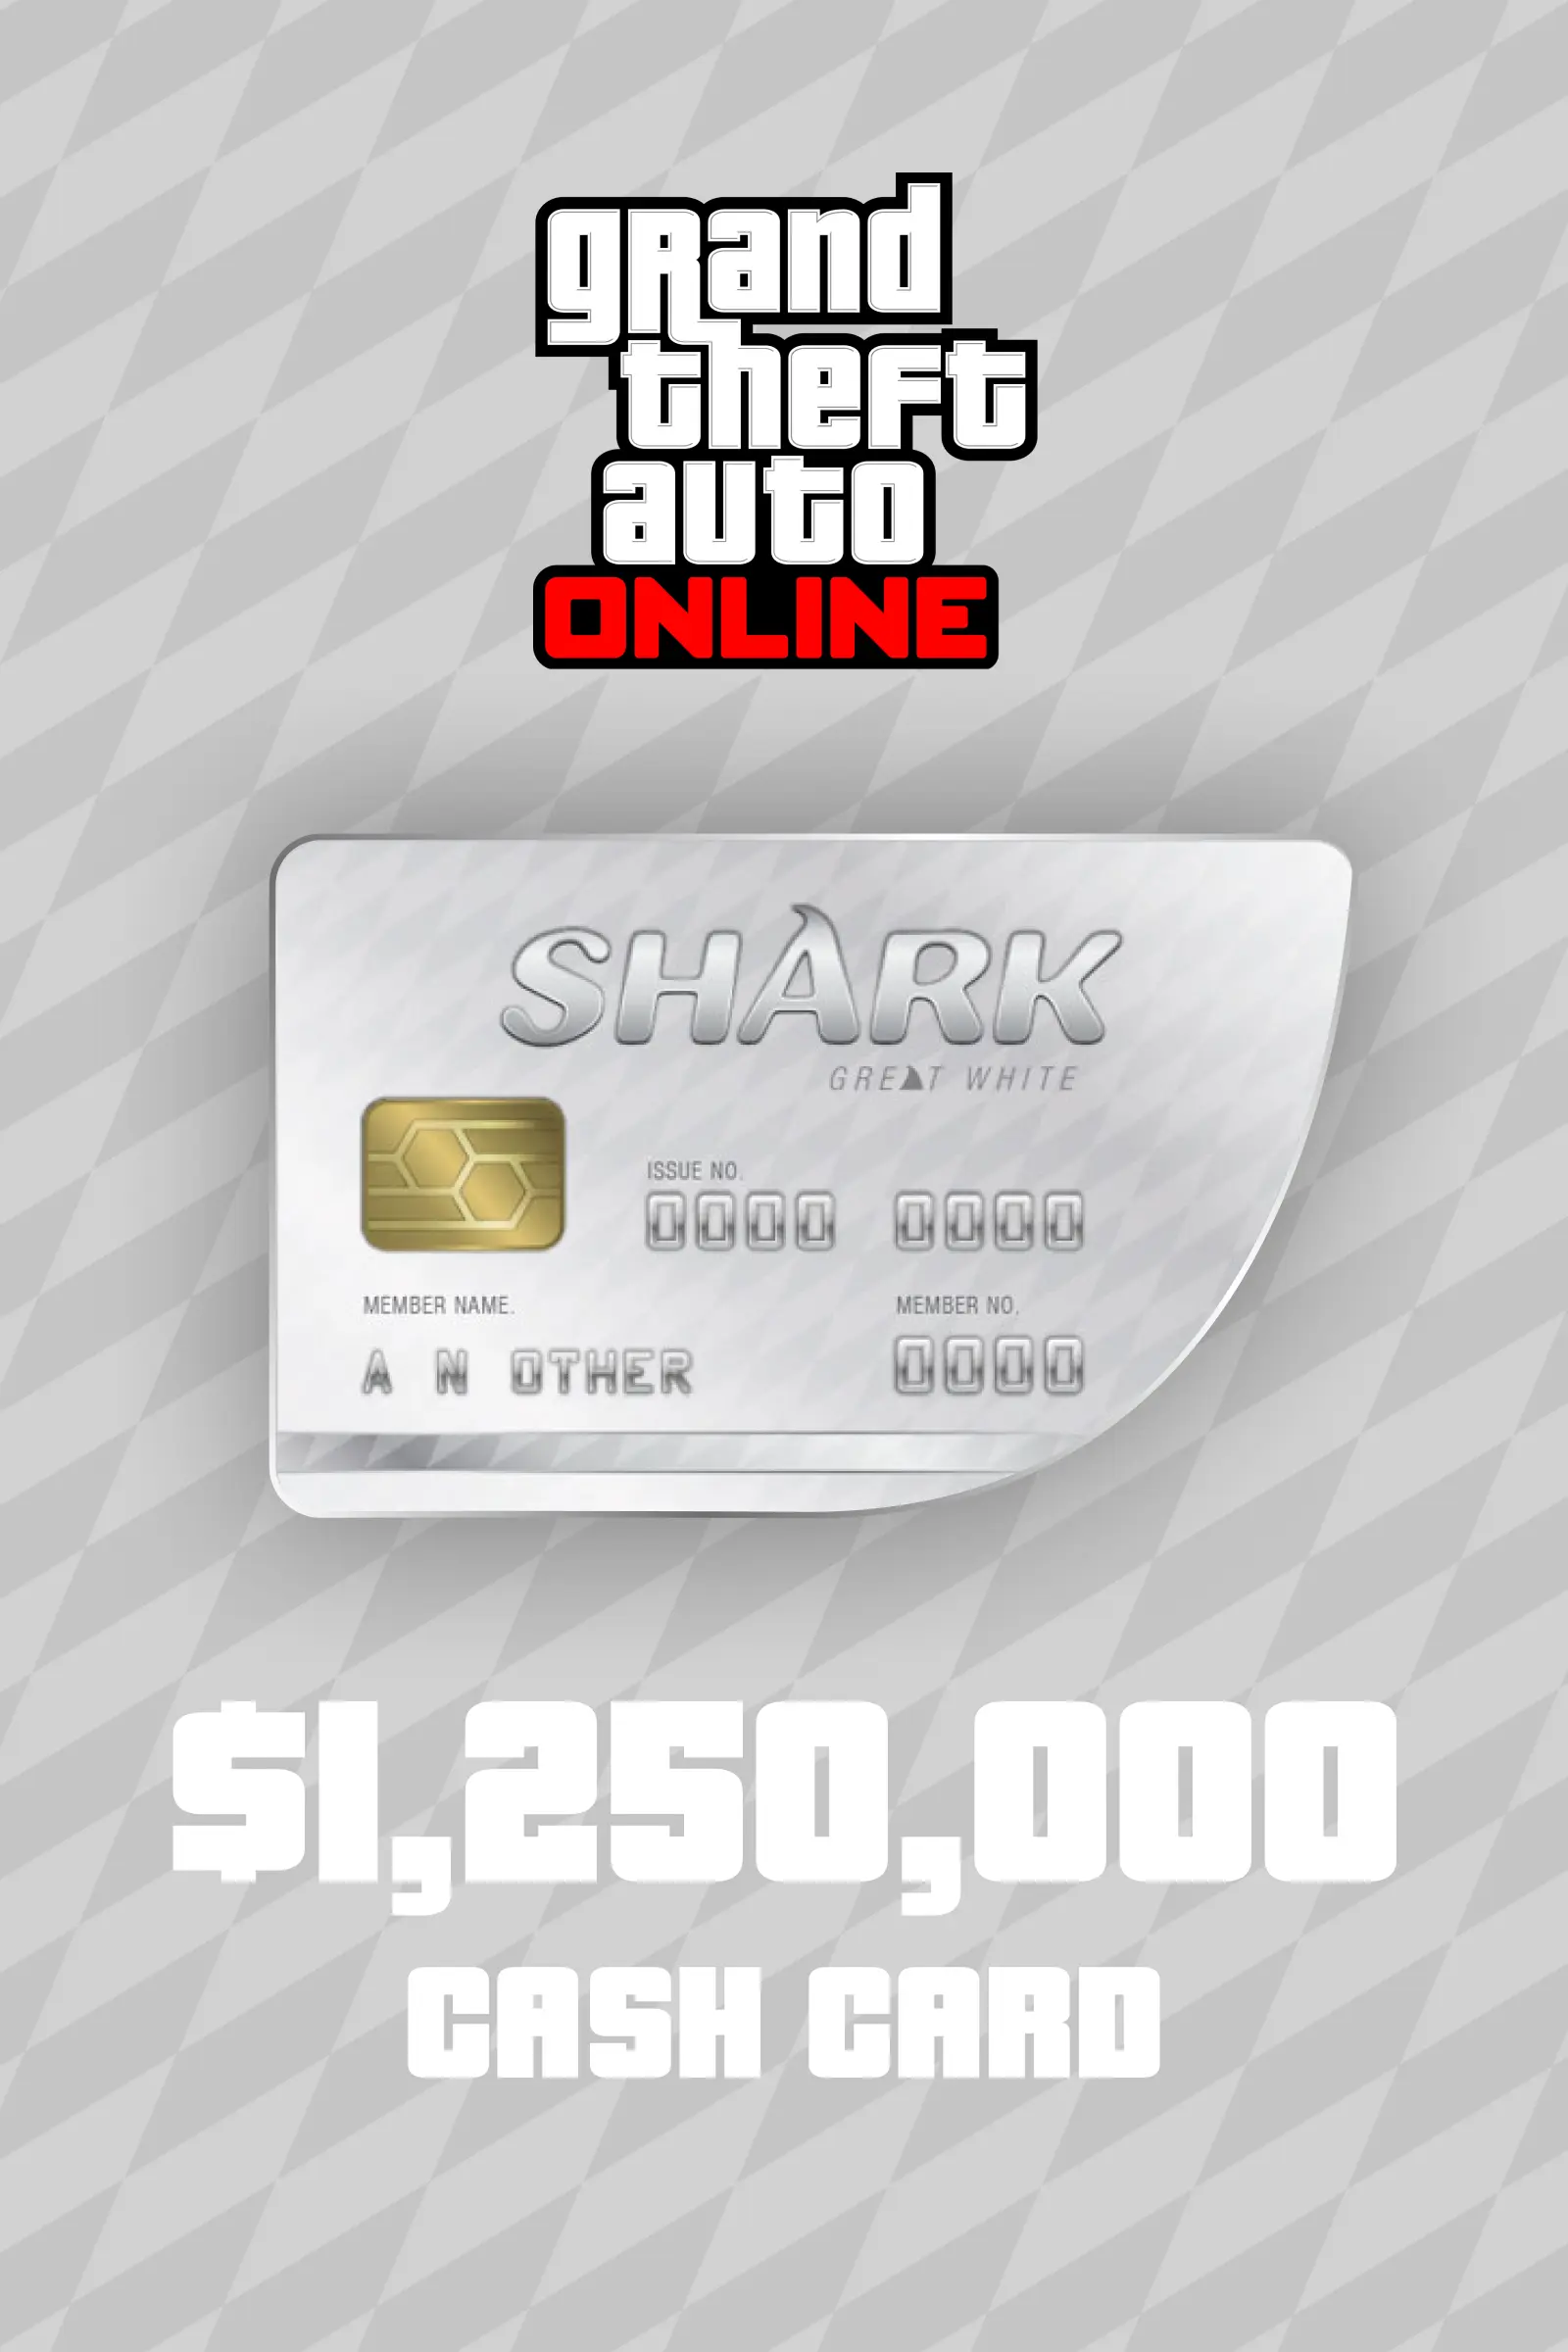 Grand Theft Auto Online: Great White Shark Cash Card $1,250,000 (PC) - Rockstar - Digital Code